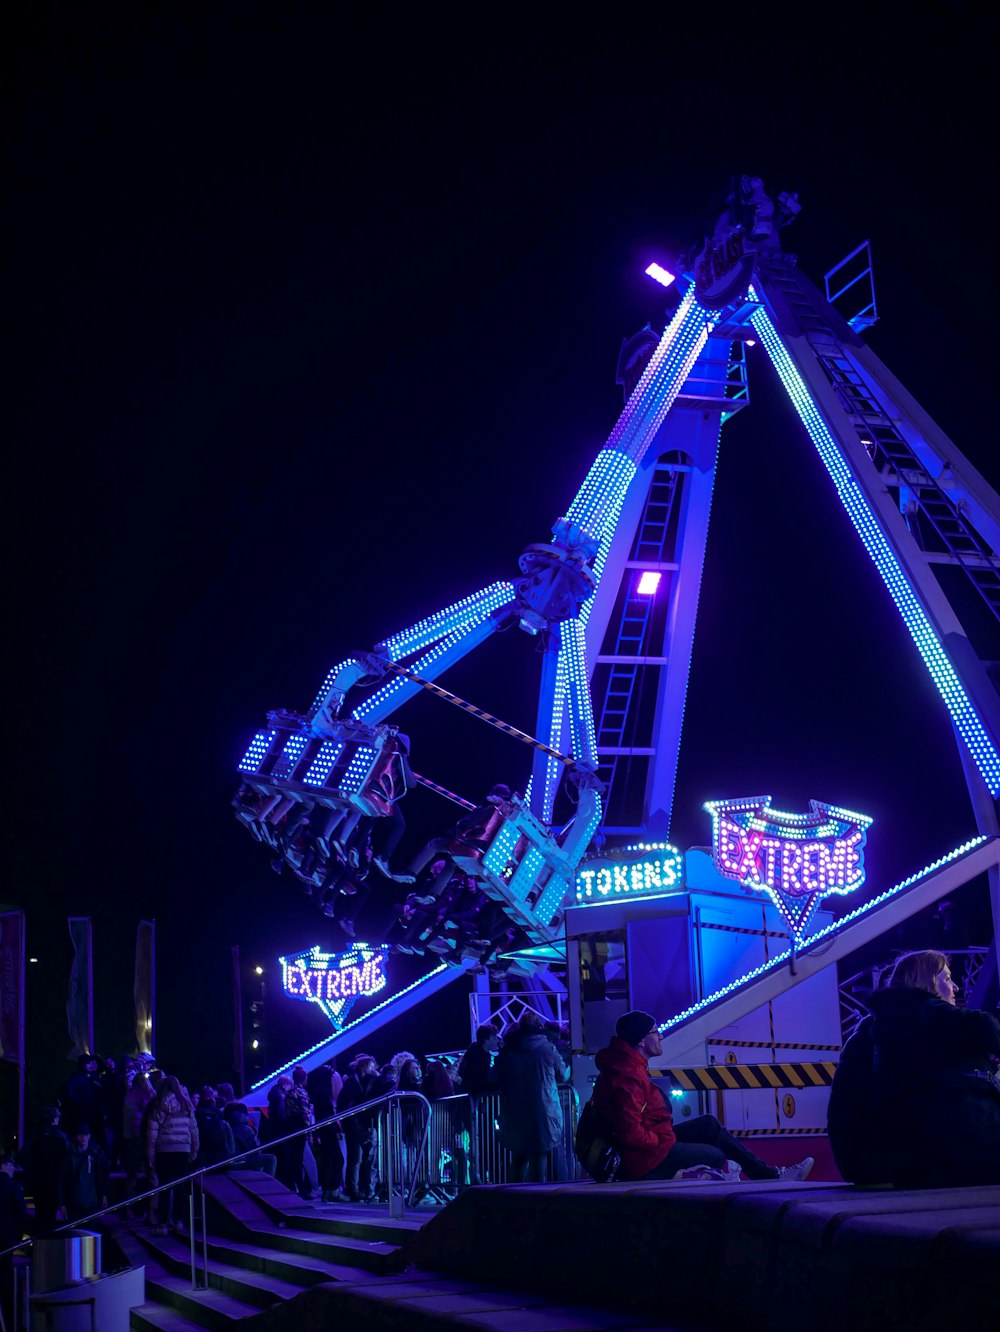 a ferris wheel lit up at night at an amusement park